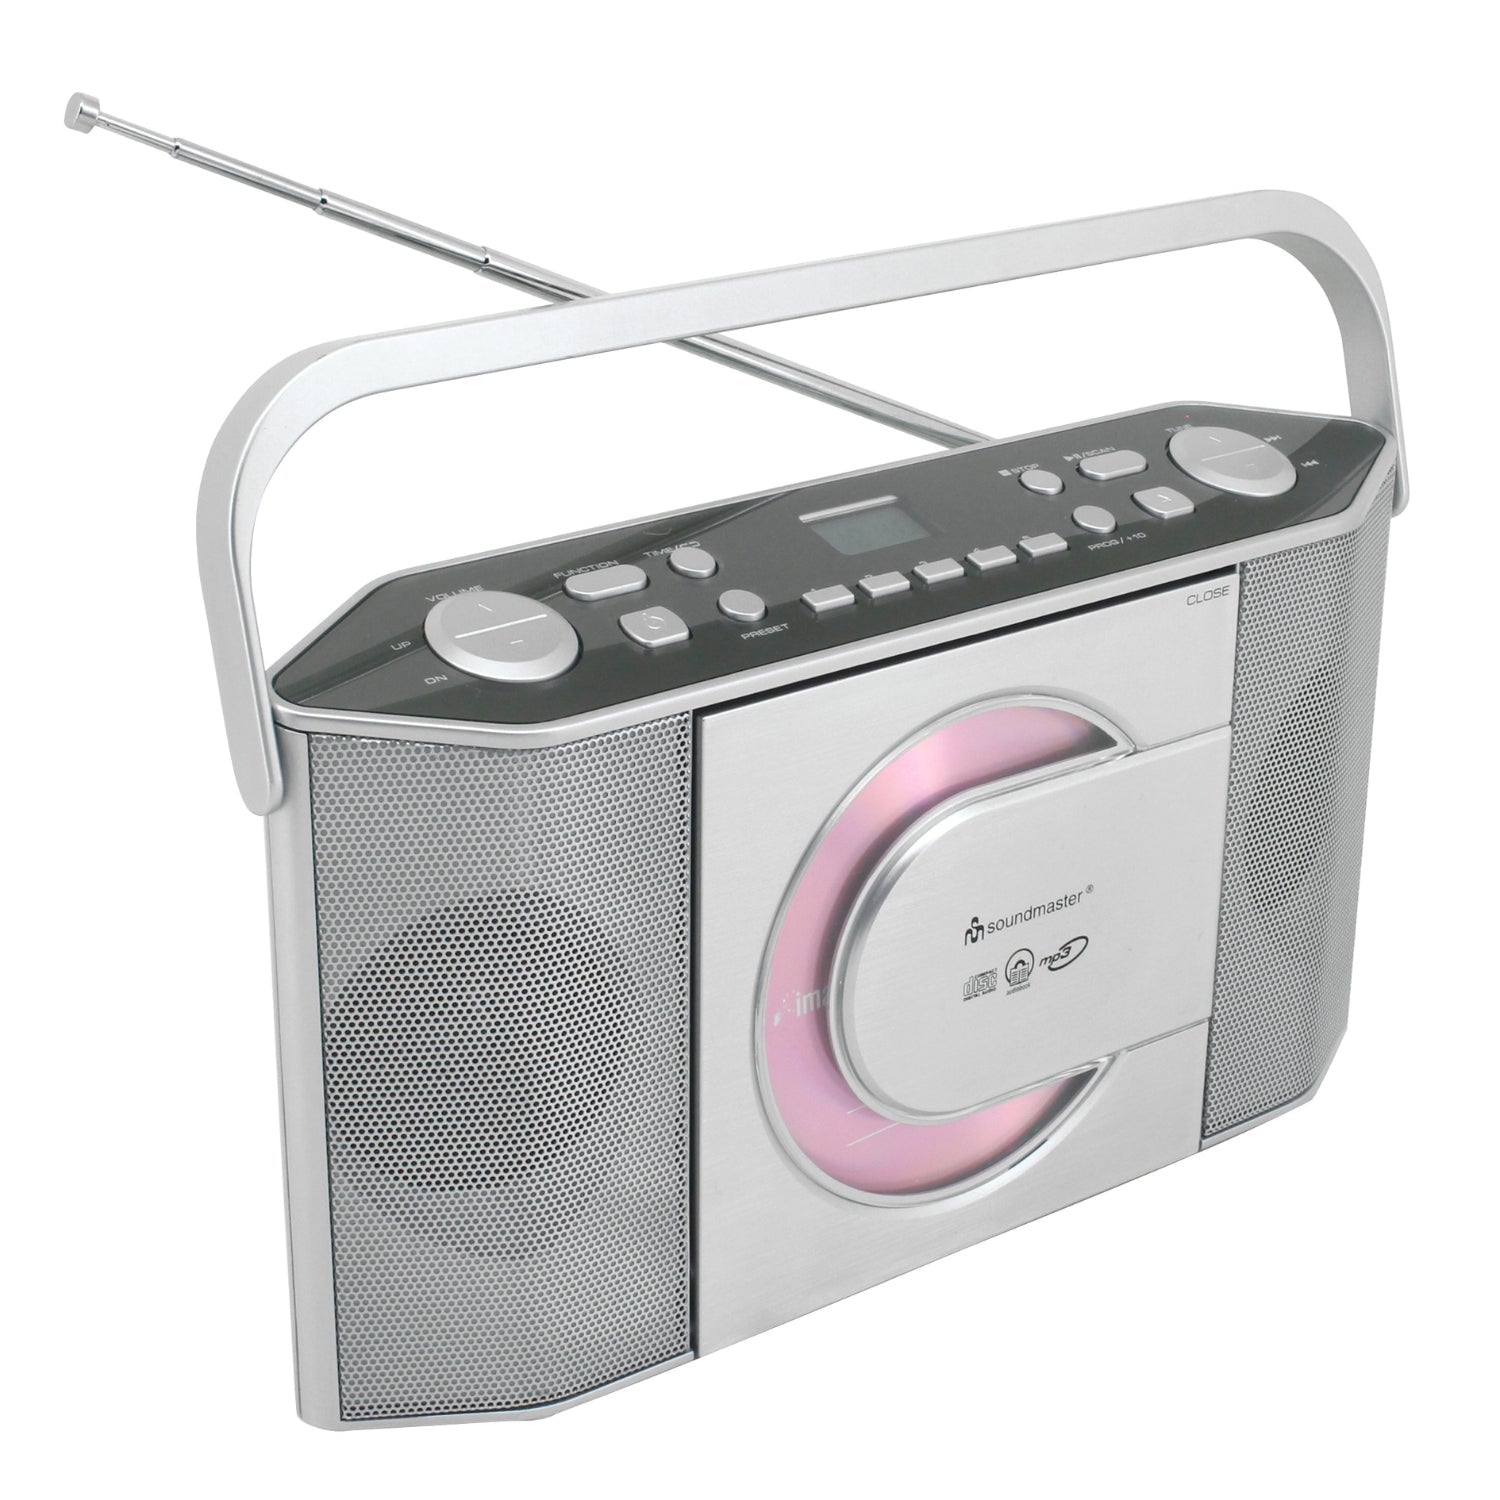 Soundmaster RCD1755SI Radio FM avec lecteur CD MP3 vertical Radio de cuisine